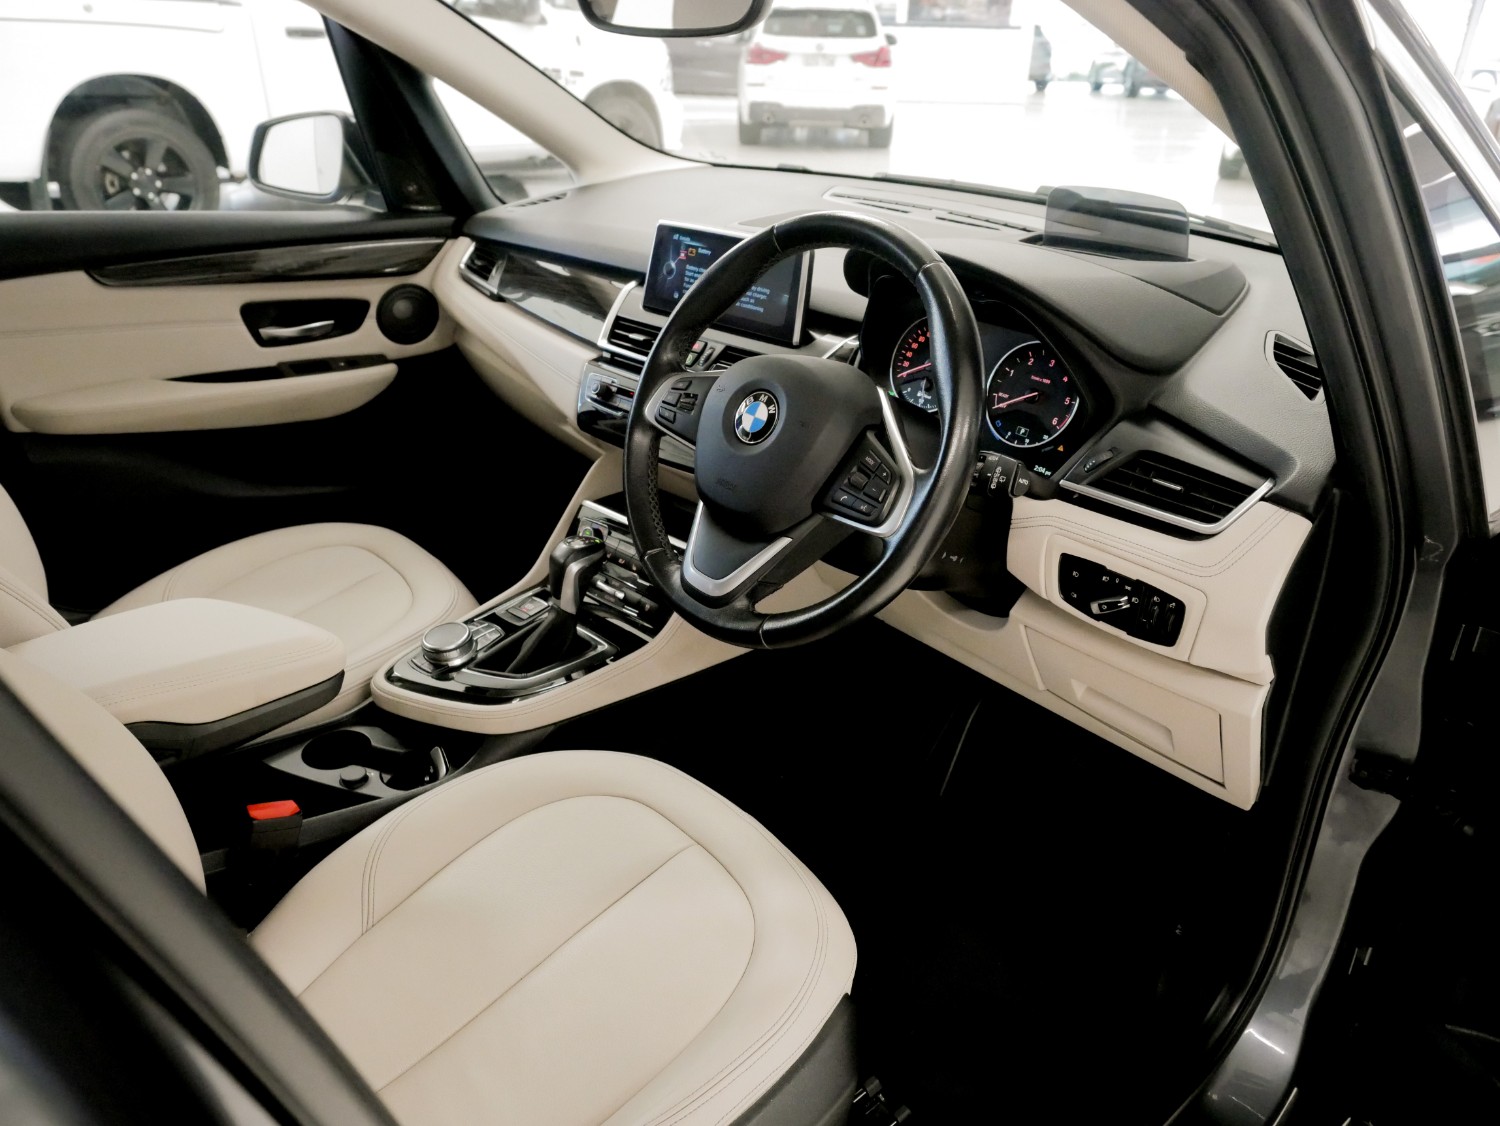 2017 BMW 2 Series Hatch Image 10